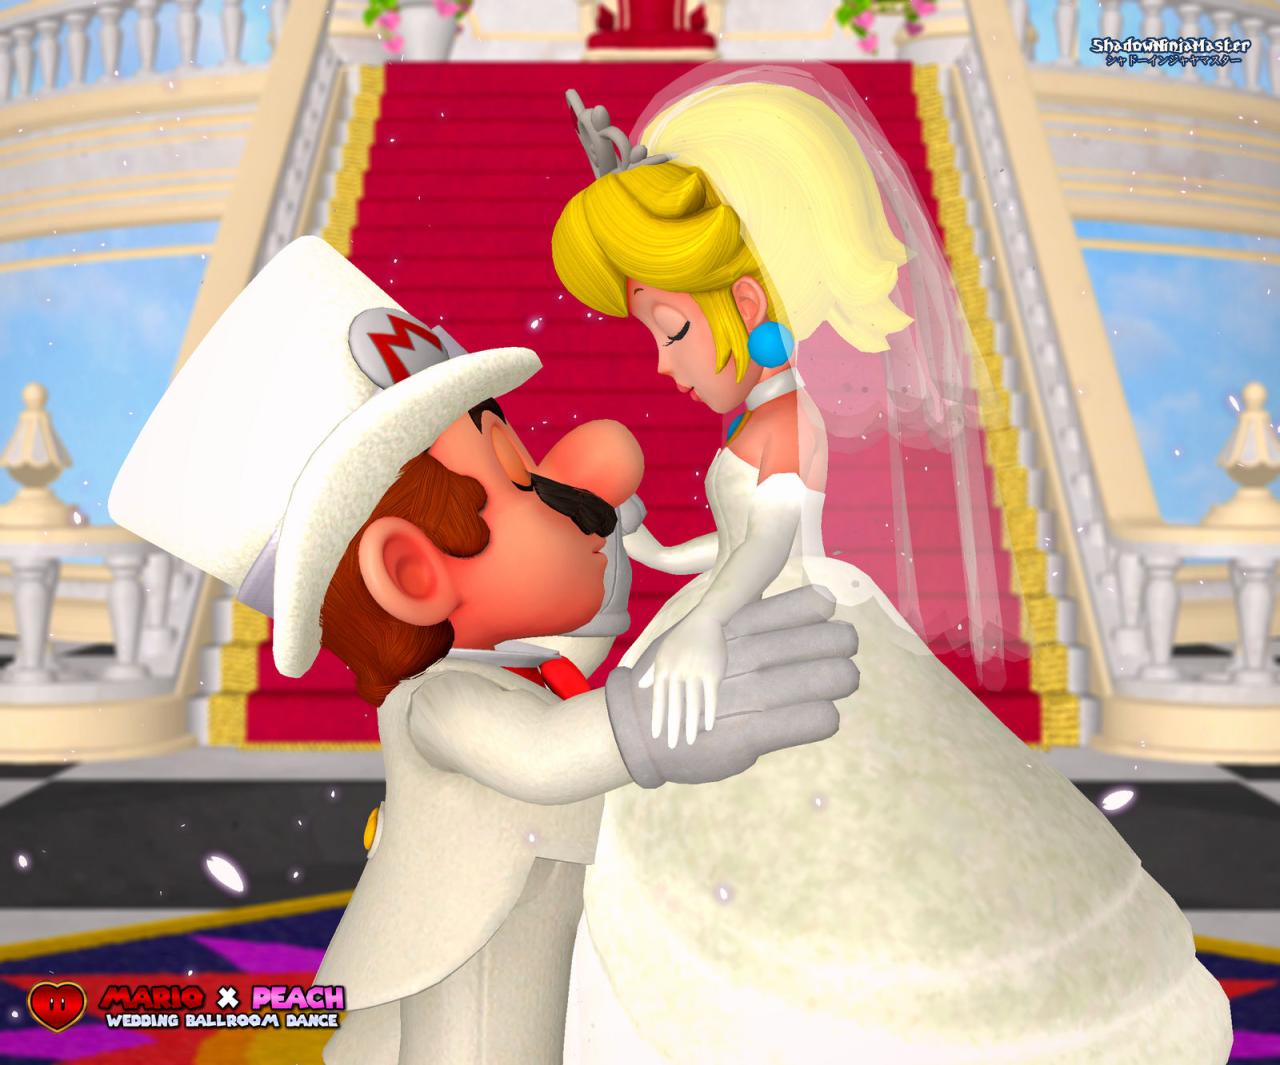 Mario X Peach: Wedding Ballroom Dance By Shadowninjamaster On Deviantart